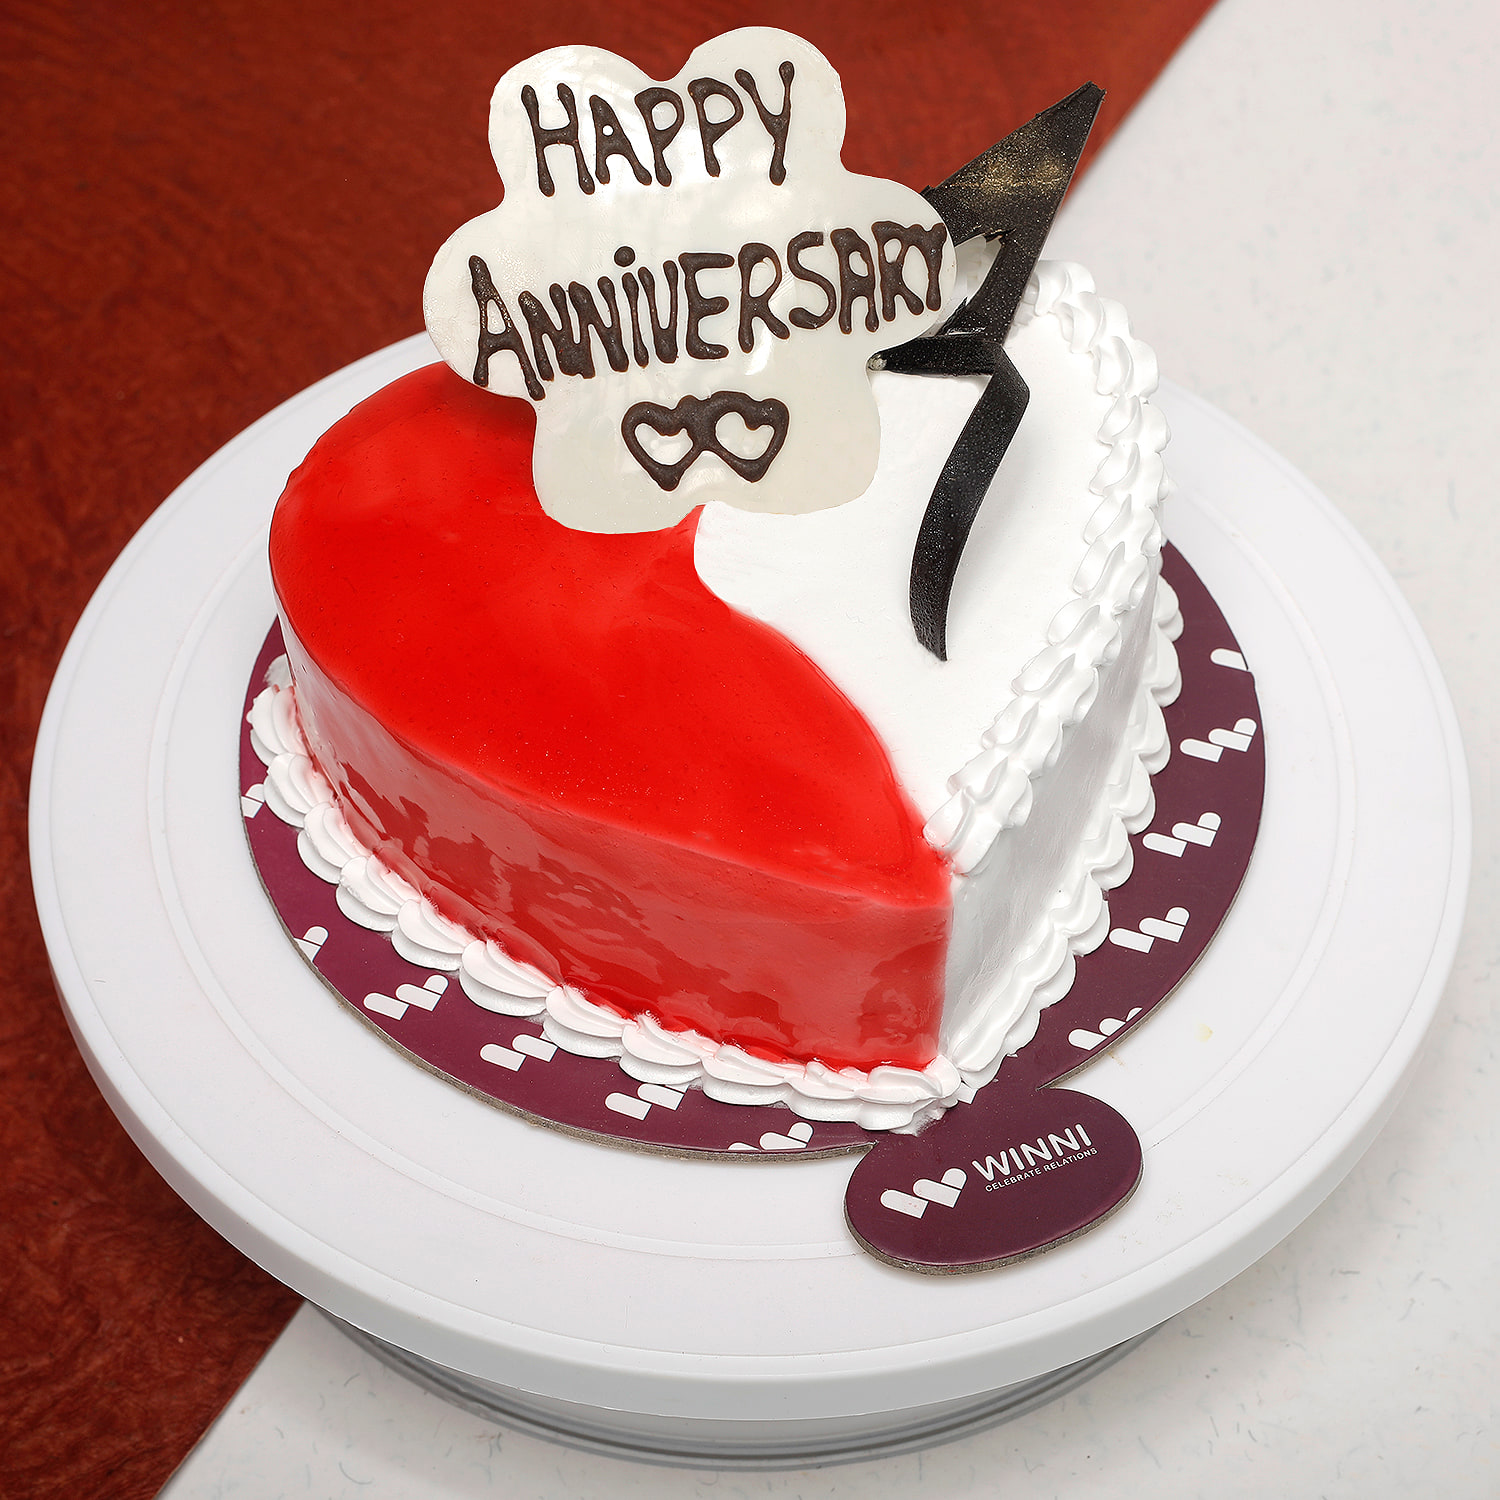 Anniversary Cake 7 – Its Coffee kery